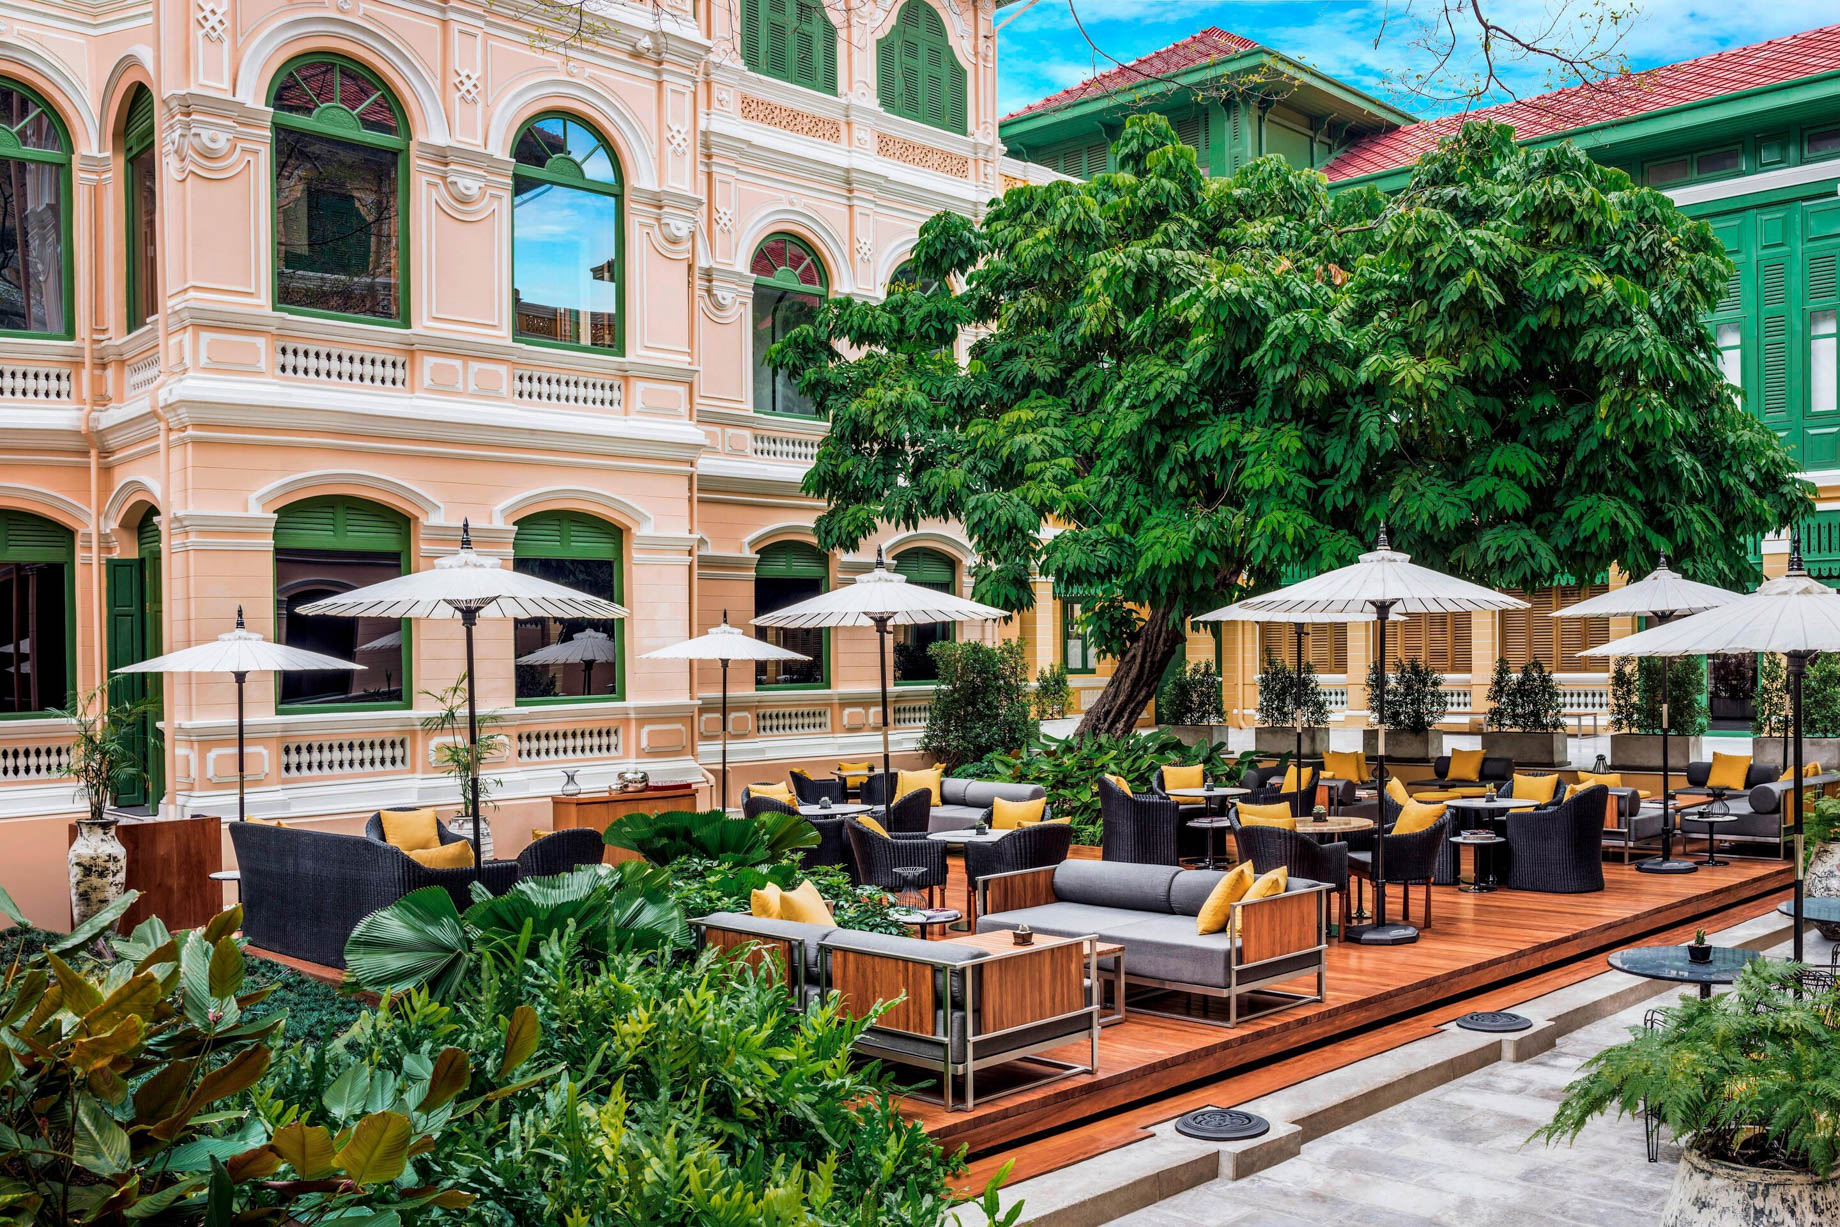 W Bangkok Hotel – Bangkok, Thailand – The Courtyard